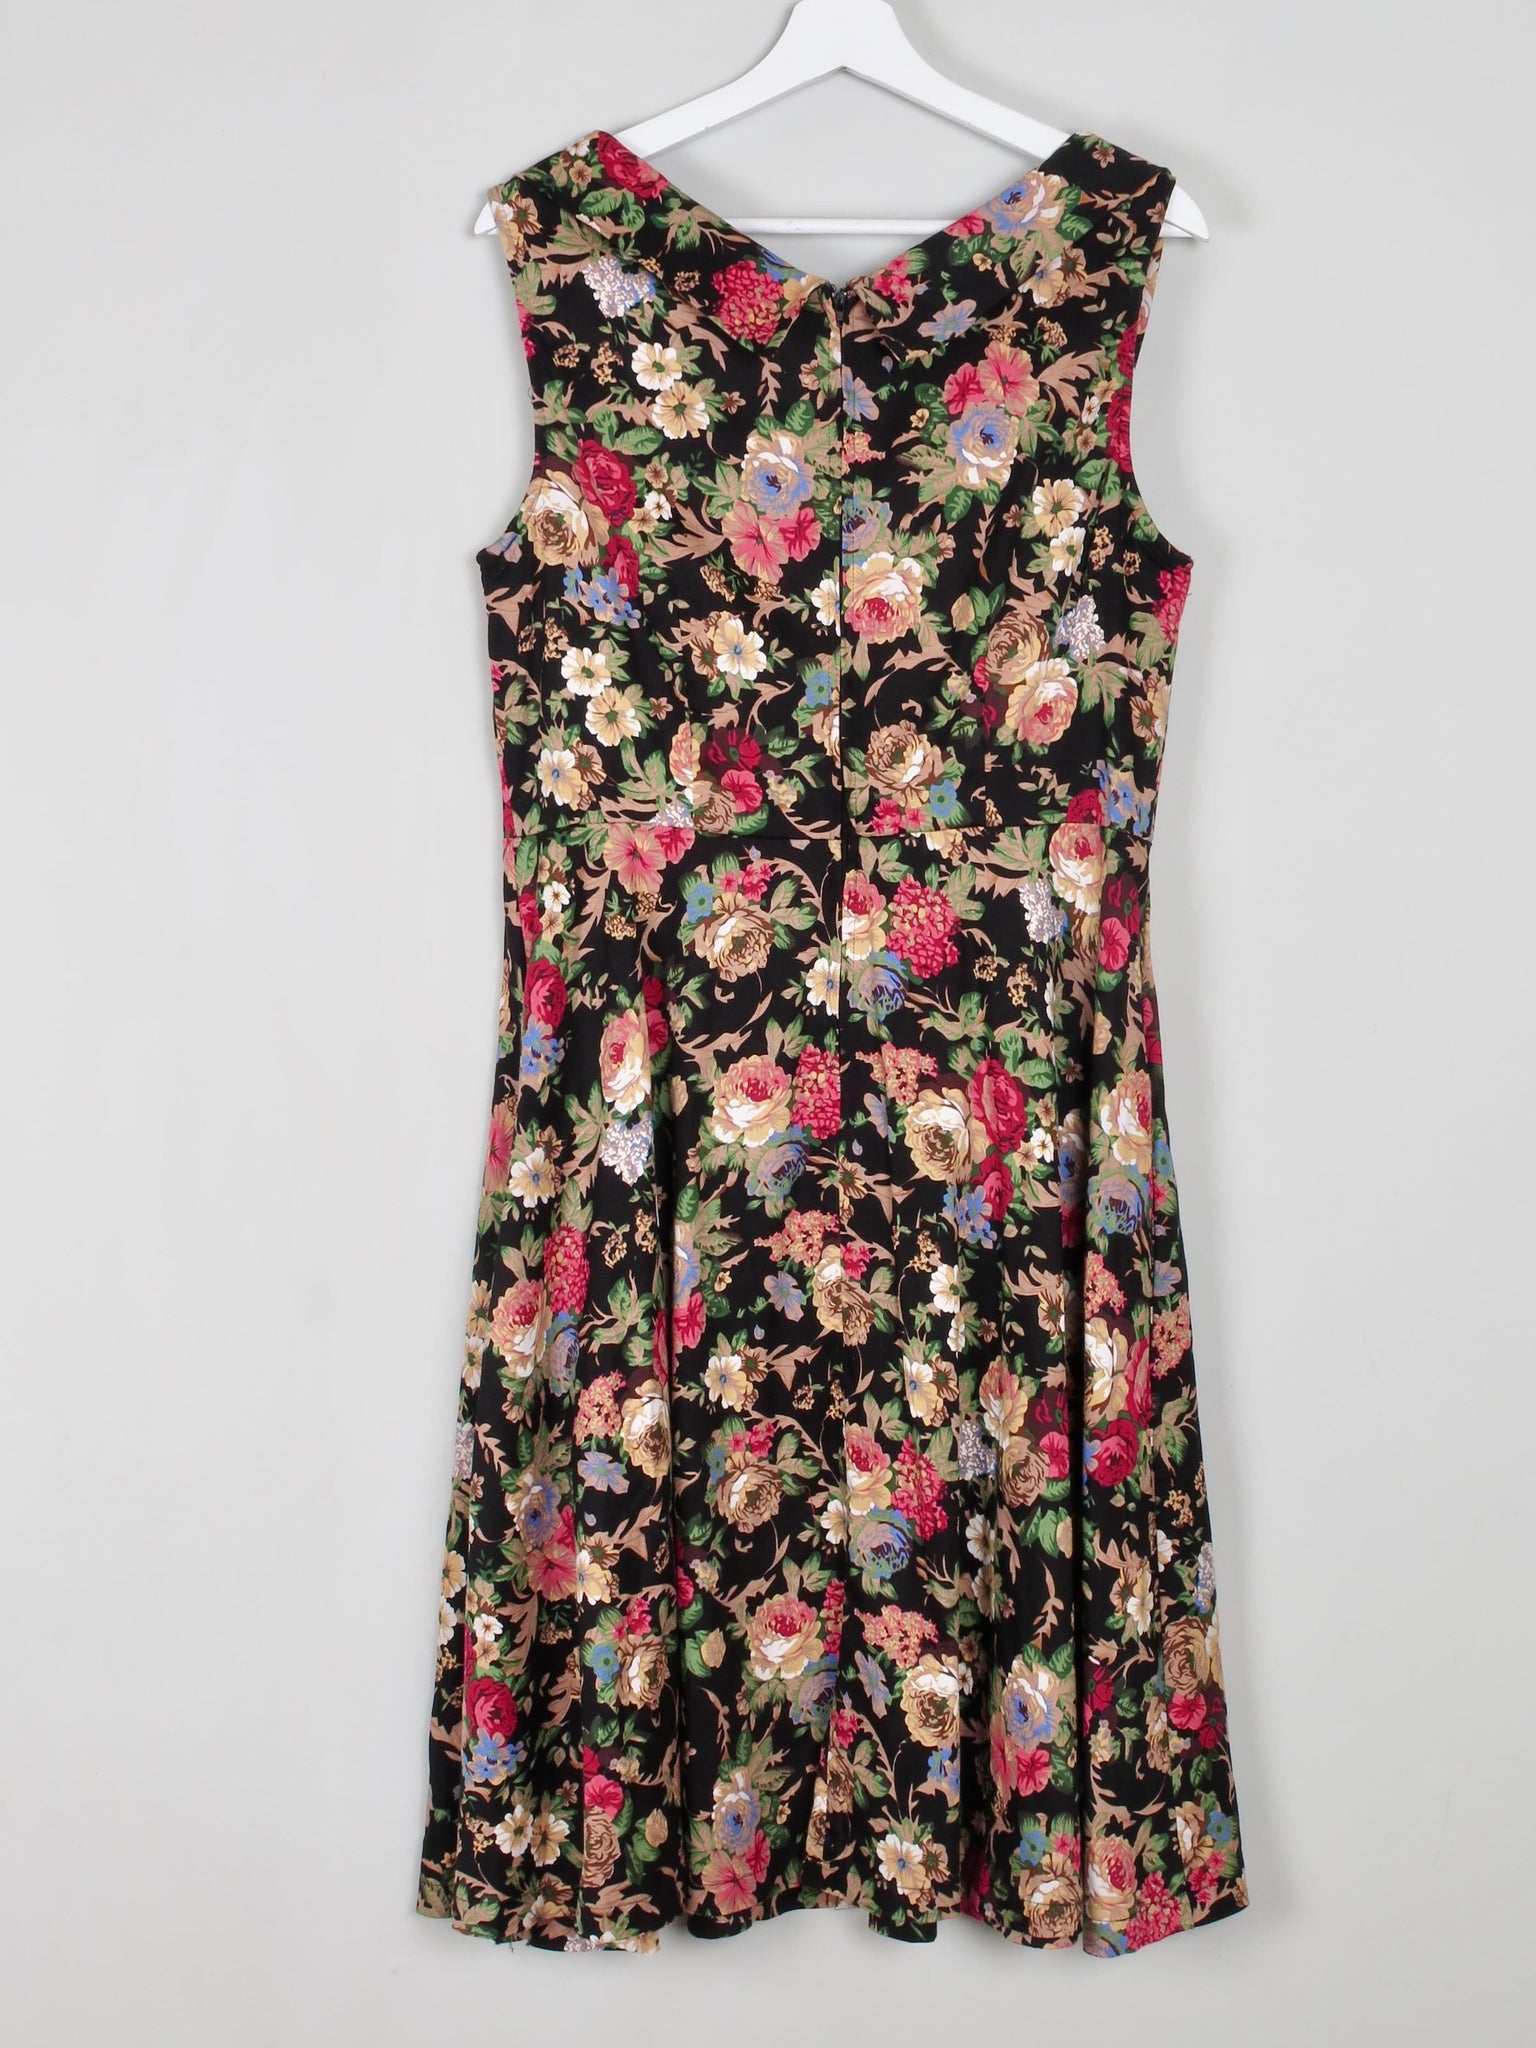 Floral Vintage 1950s Style Dress 14 - The Harlequin